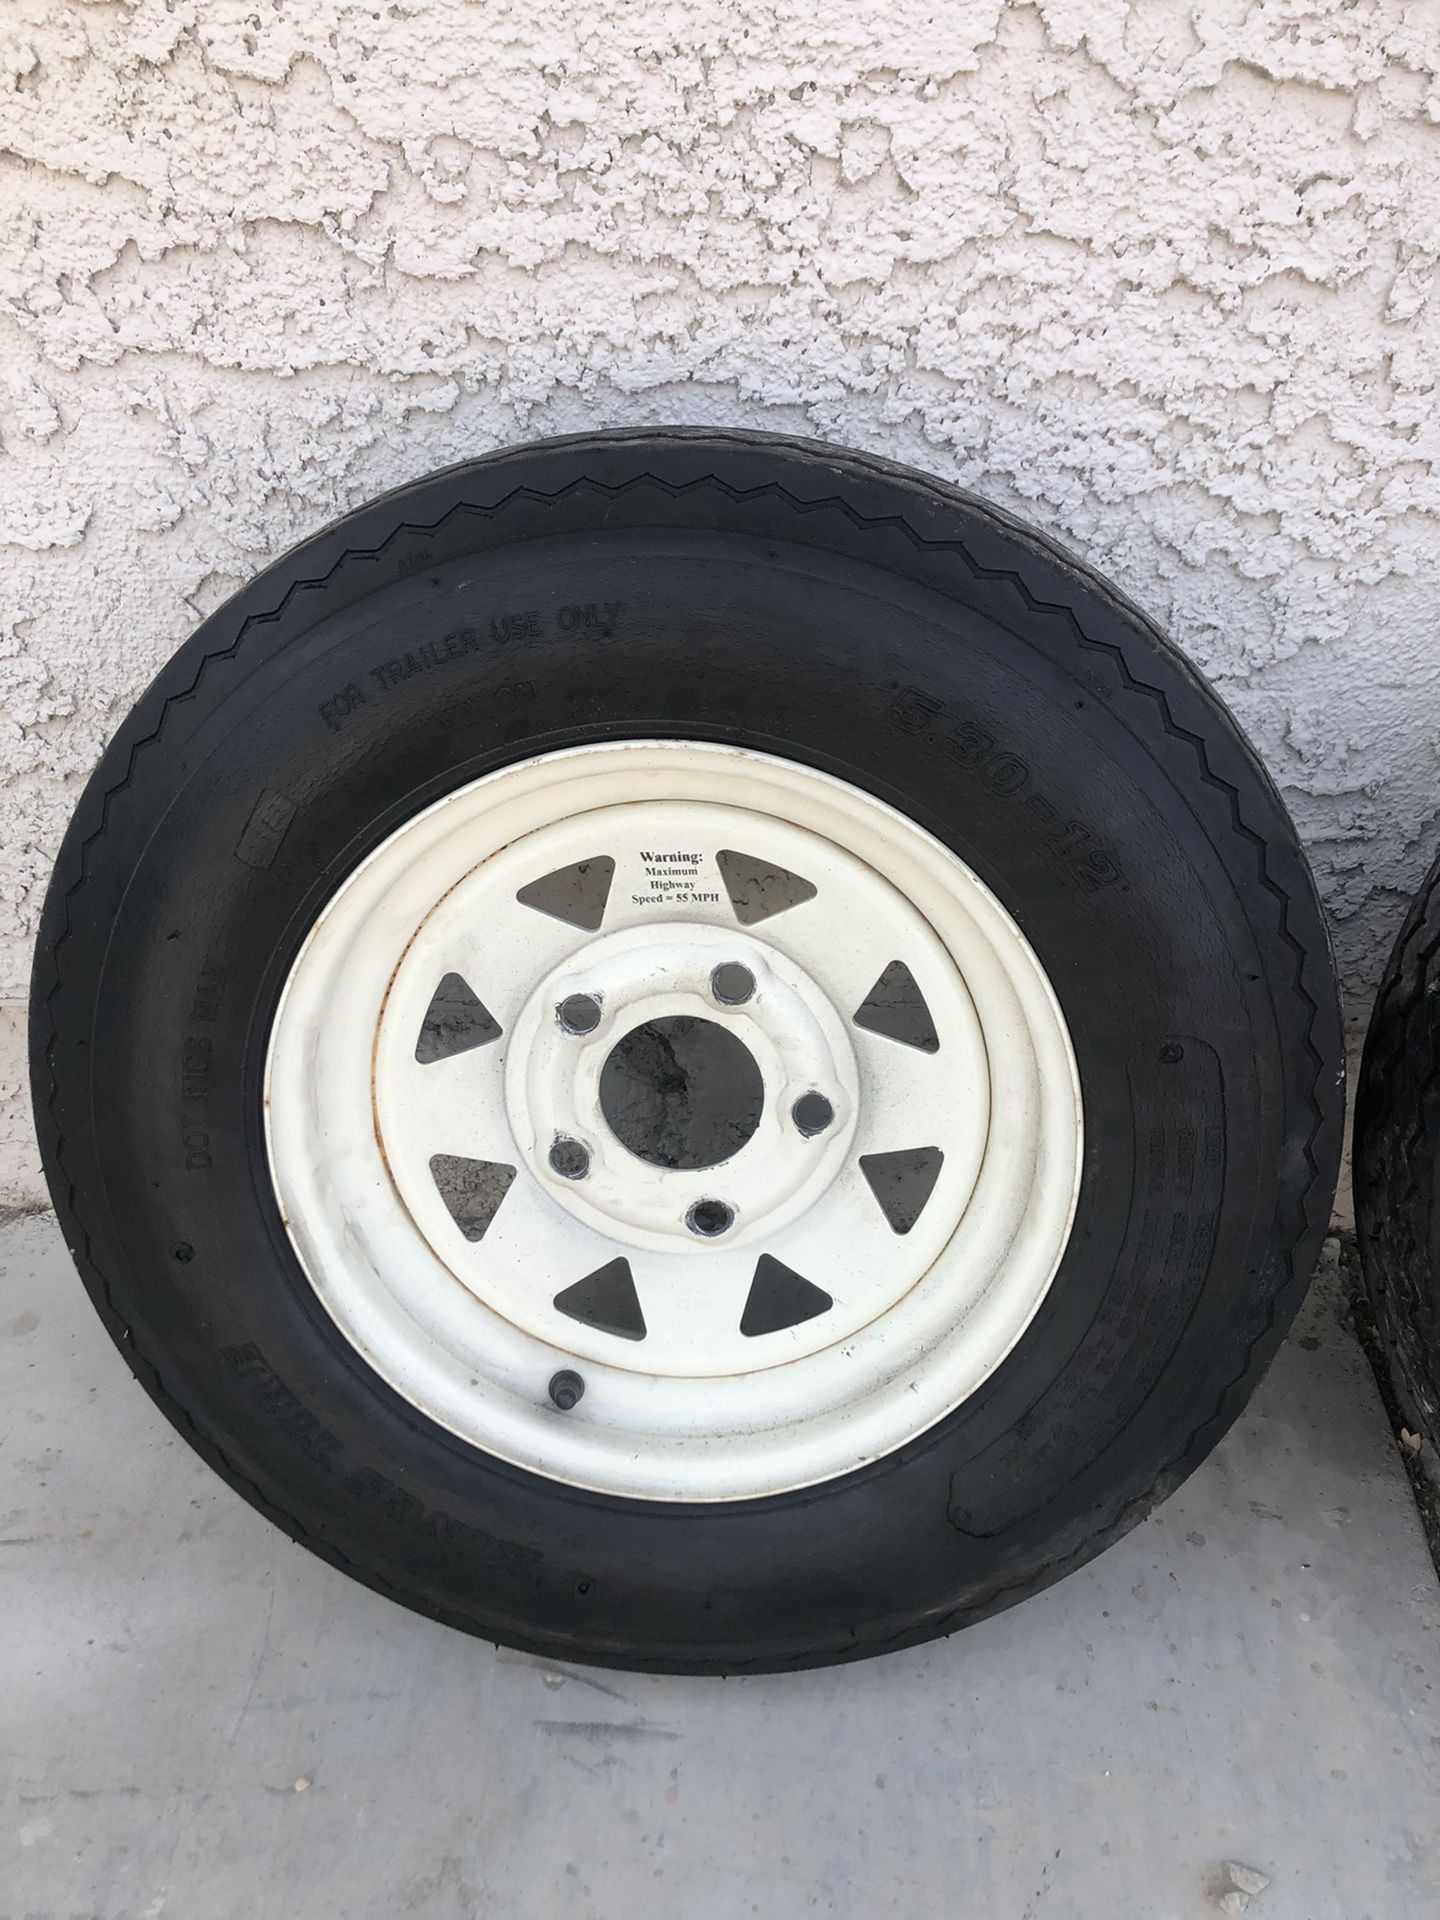 12 inch trailer wheels / tires